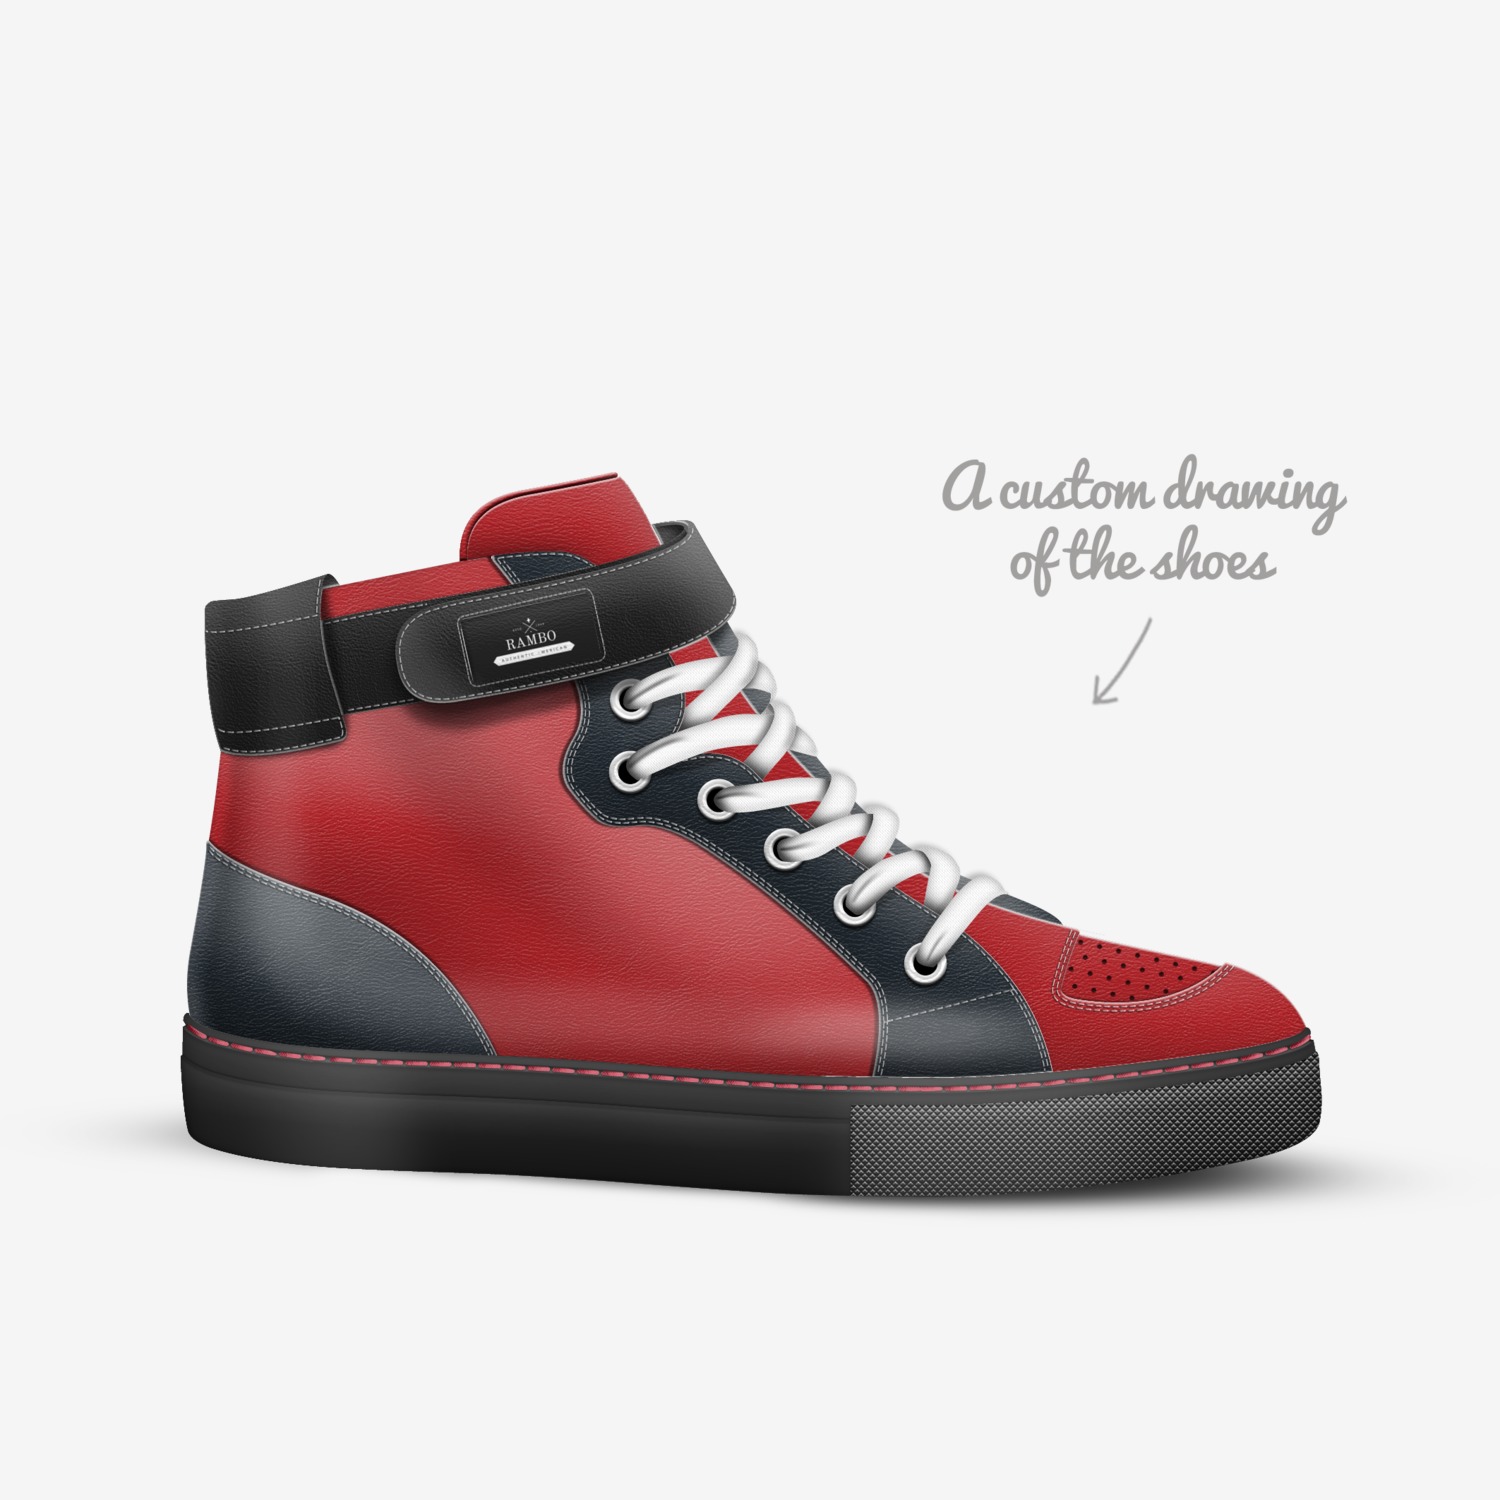 RAMBO | A Custom Shoe concept by Robert Rodriguez